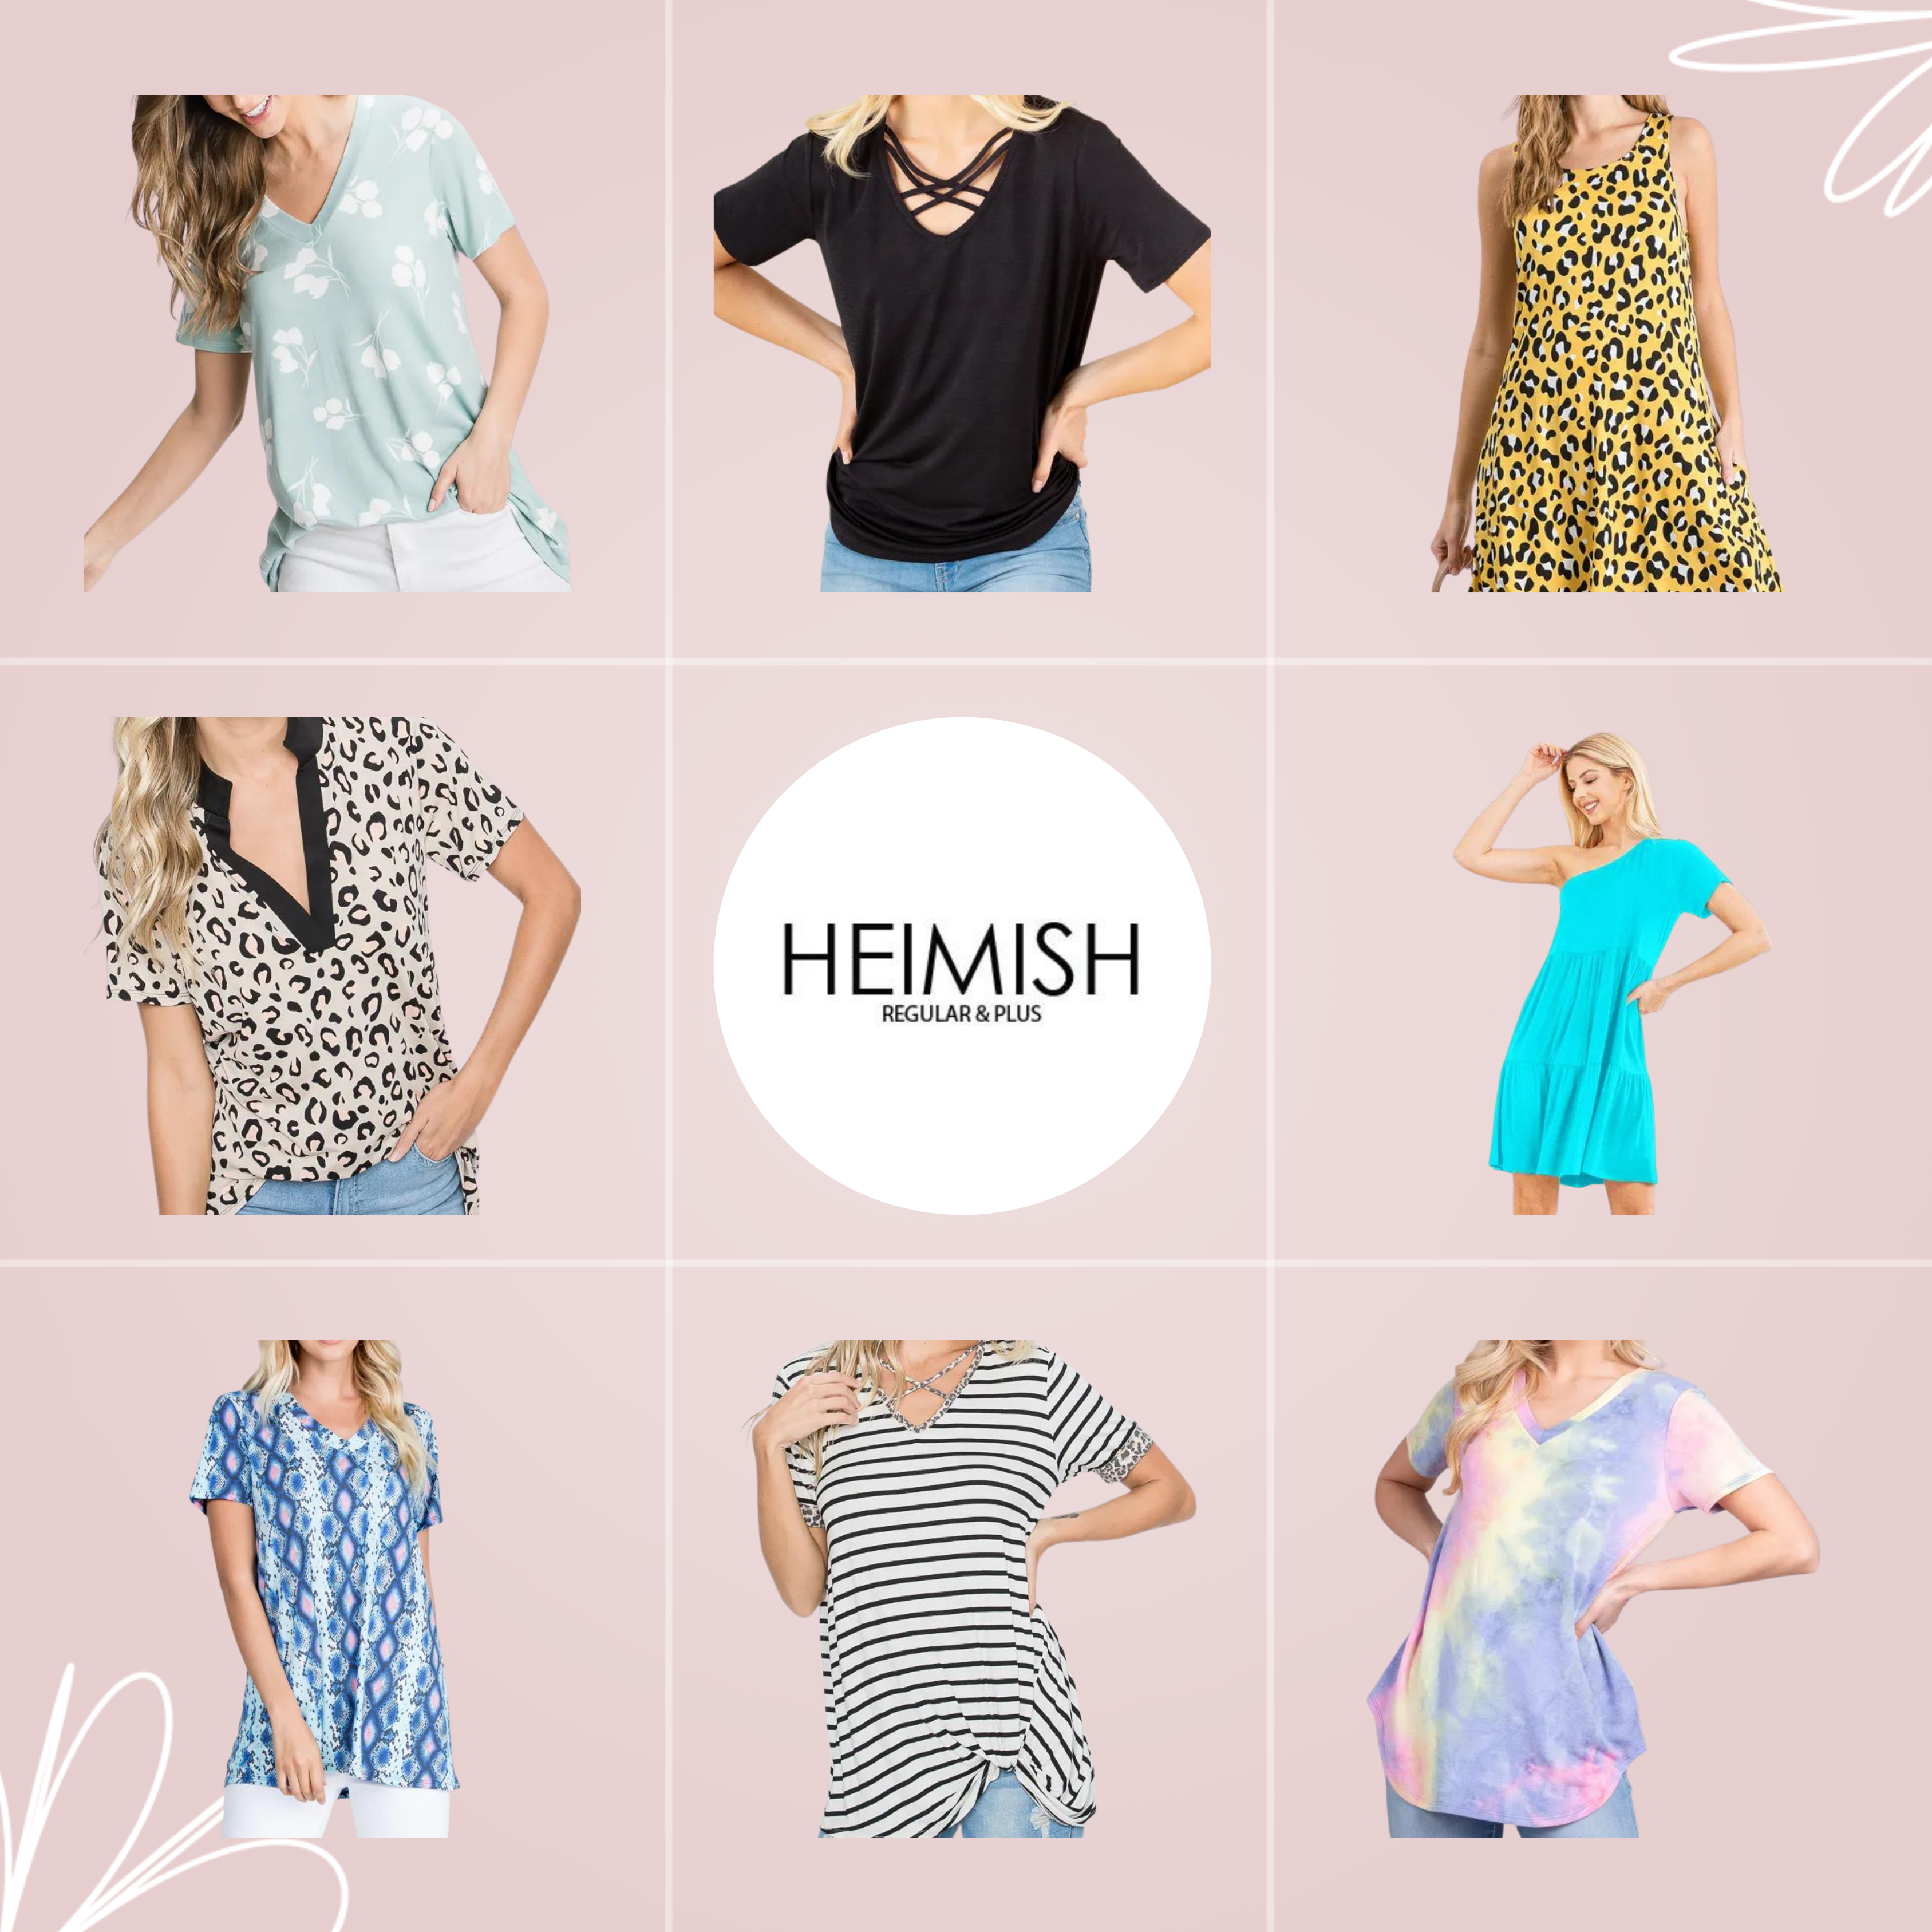 Brand image for Heimish